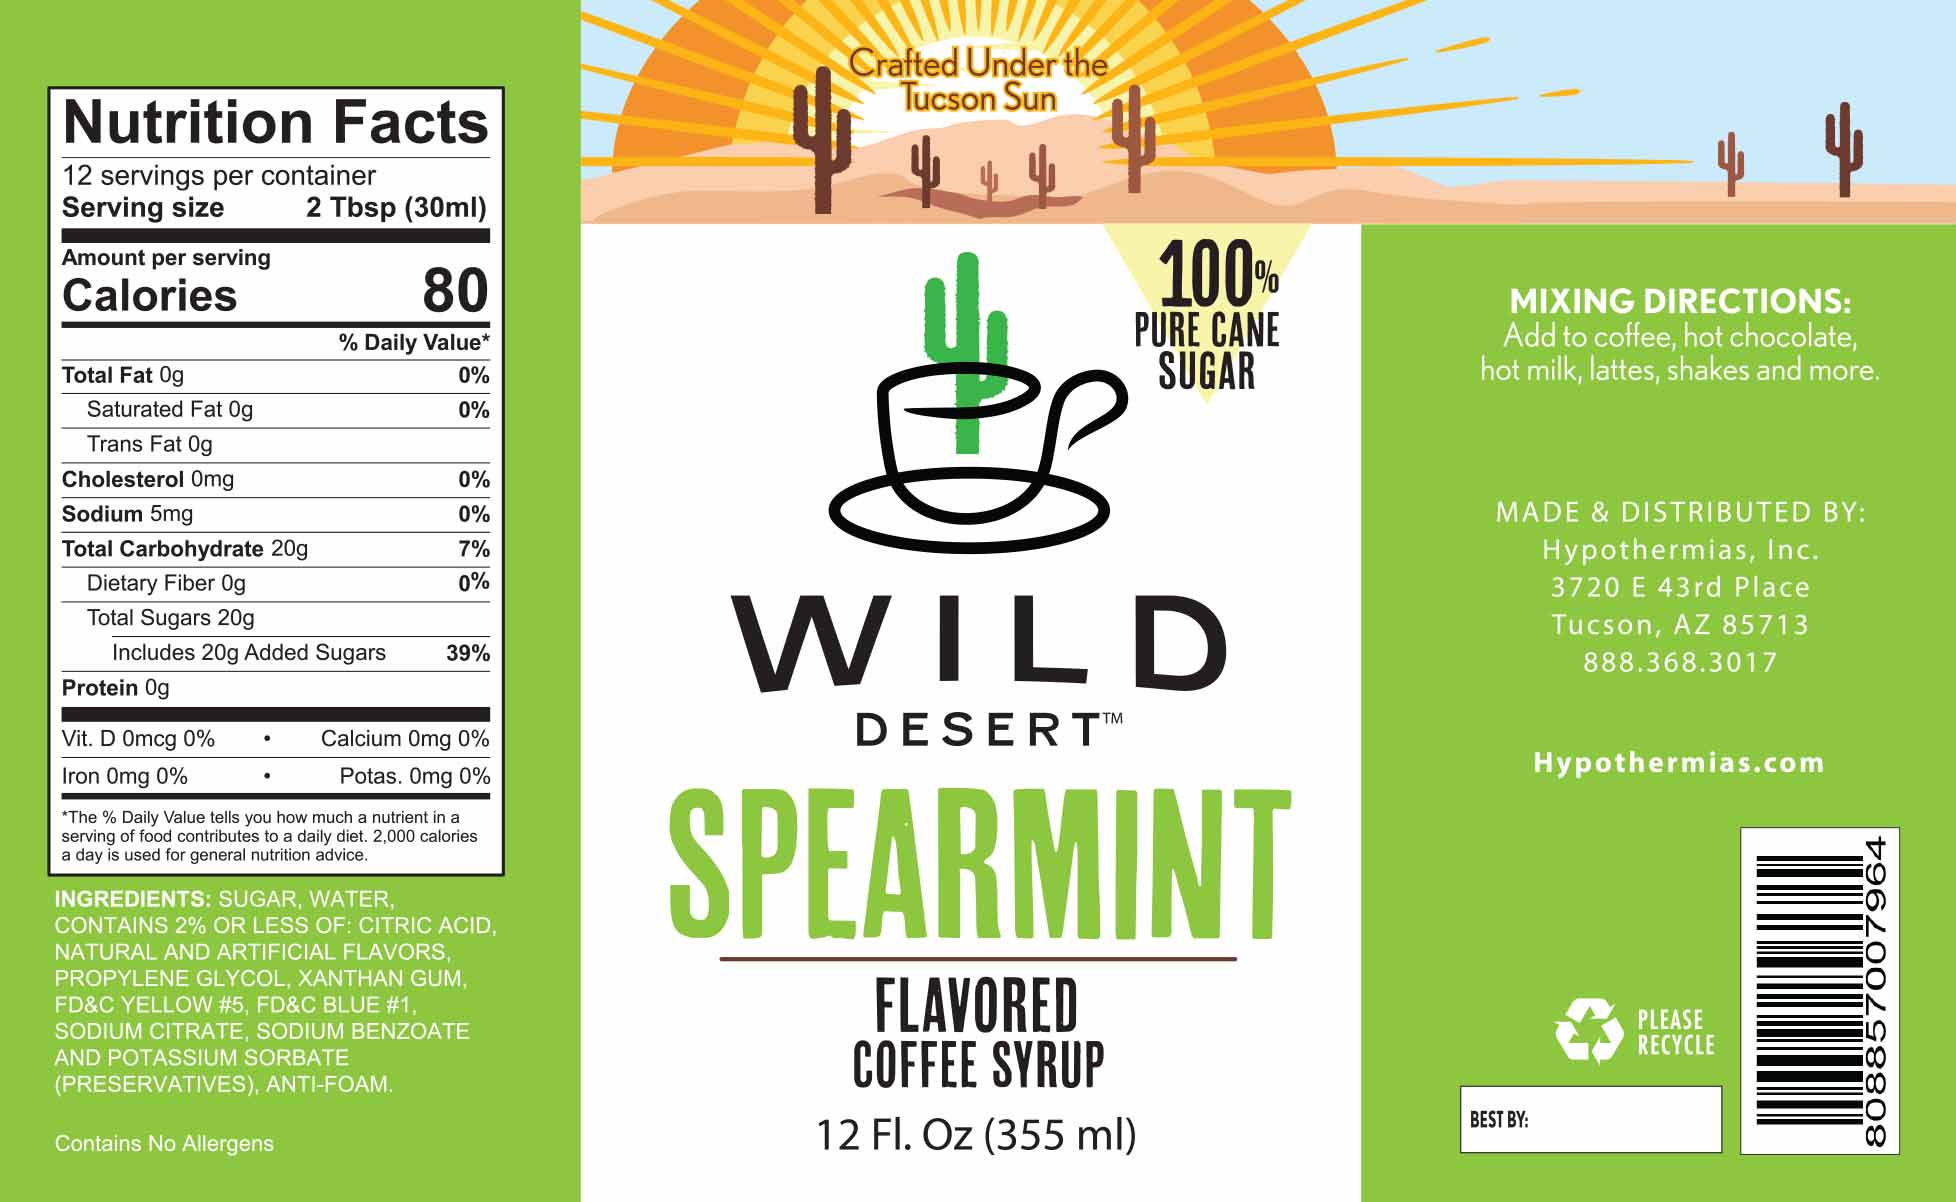 Spearmint Coffee Syrup - Hypothermias.com